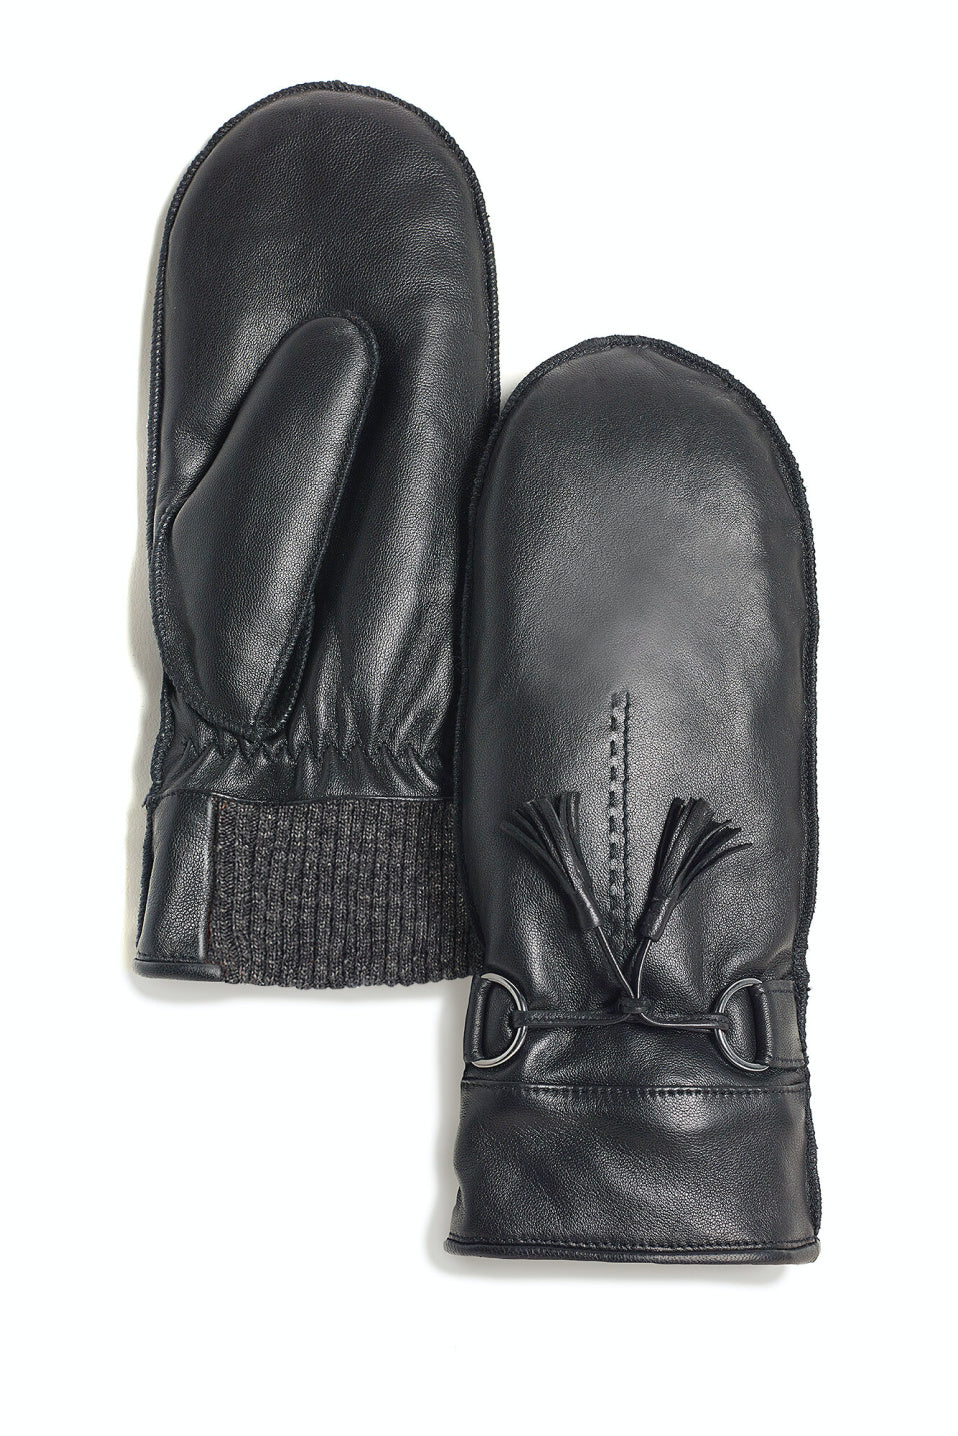 Westmount Leather Mitt